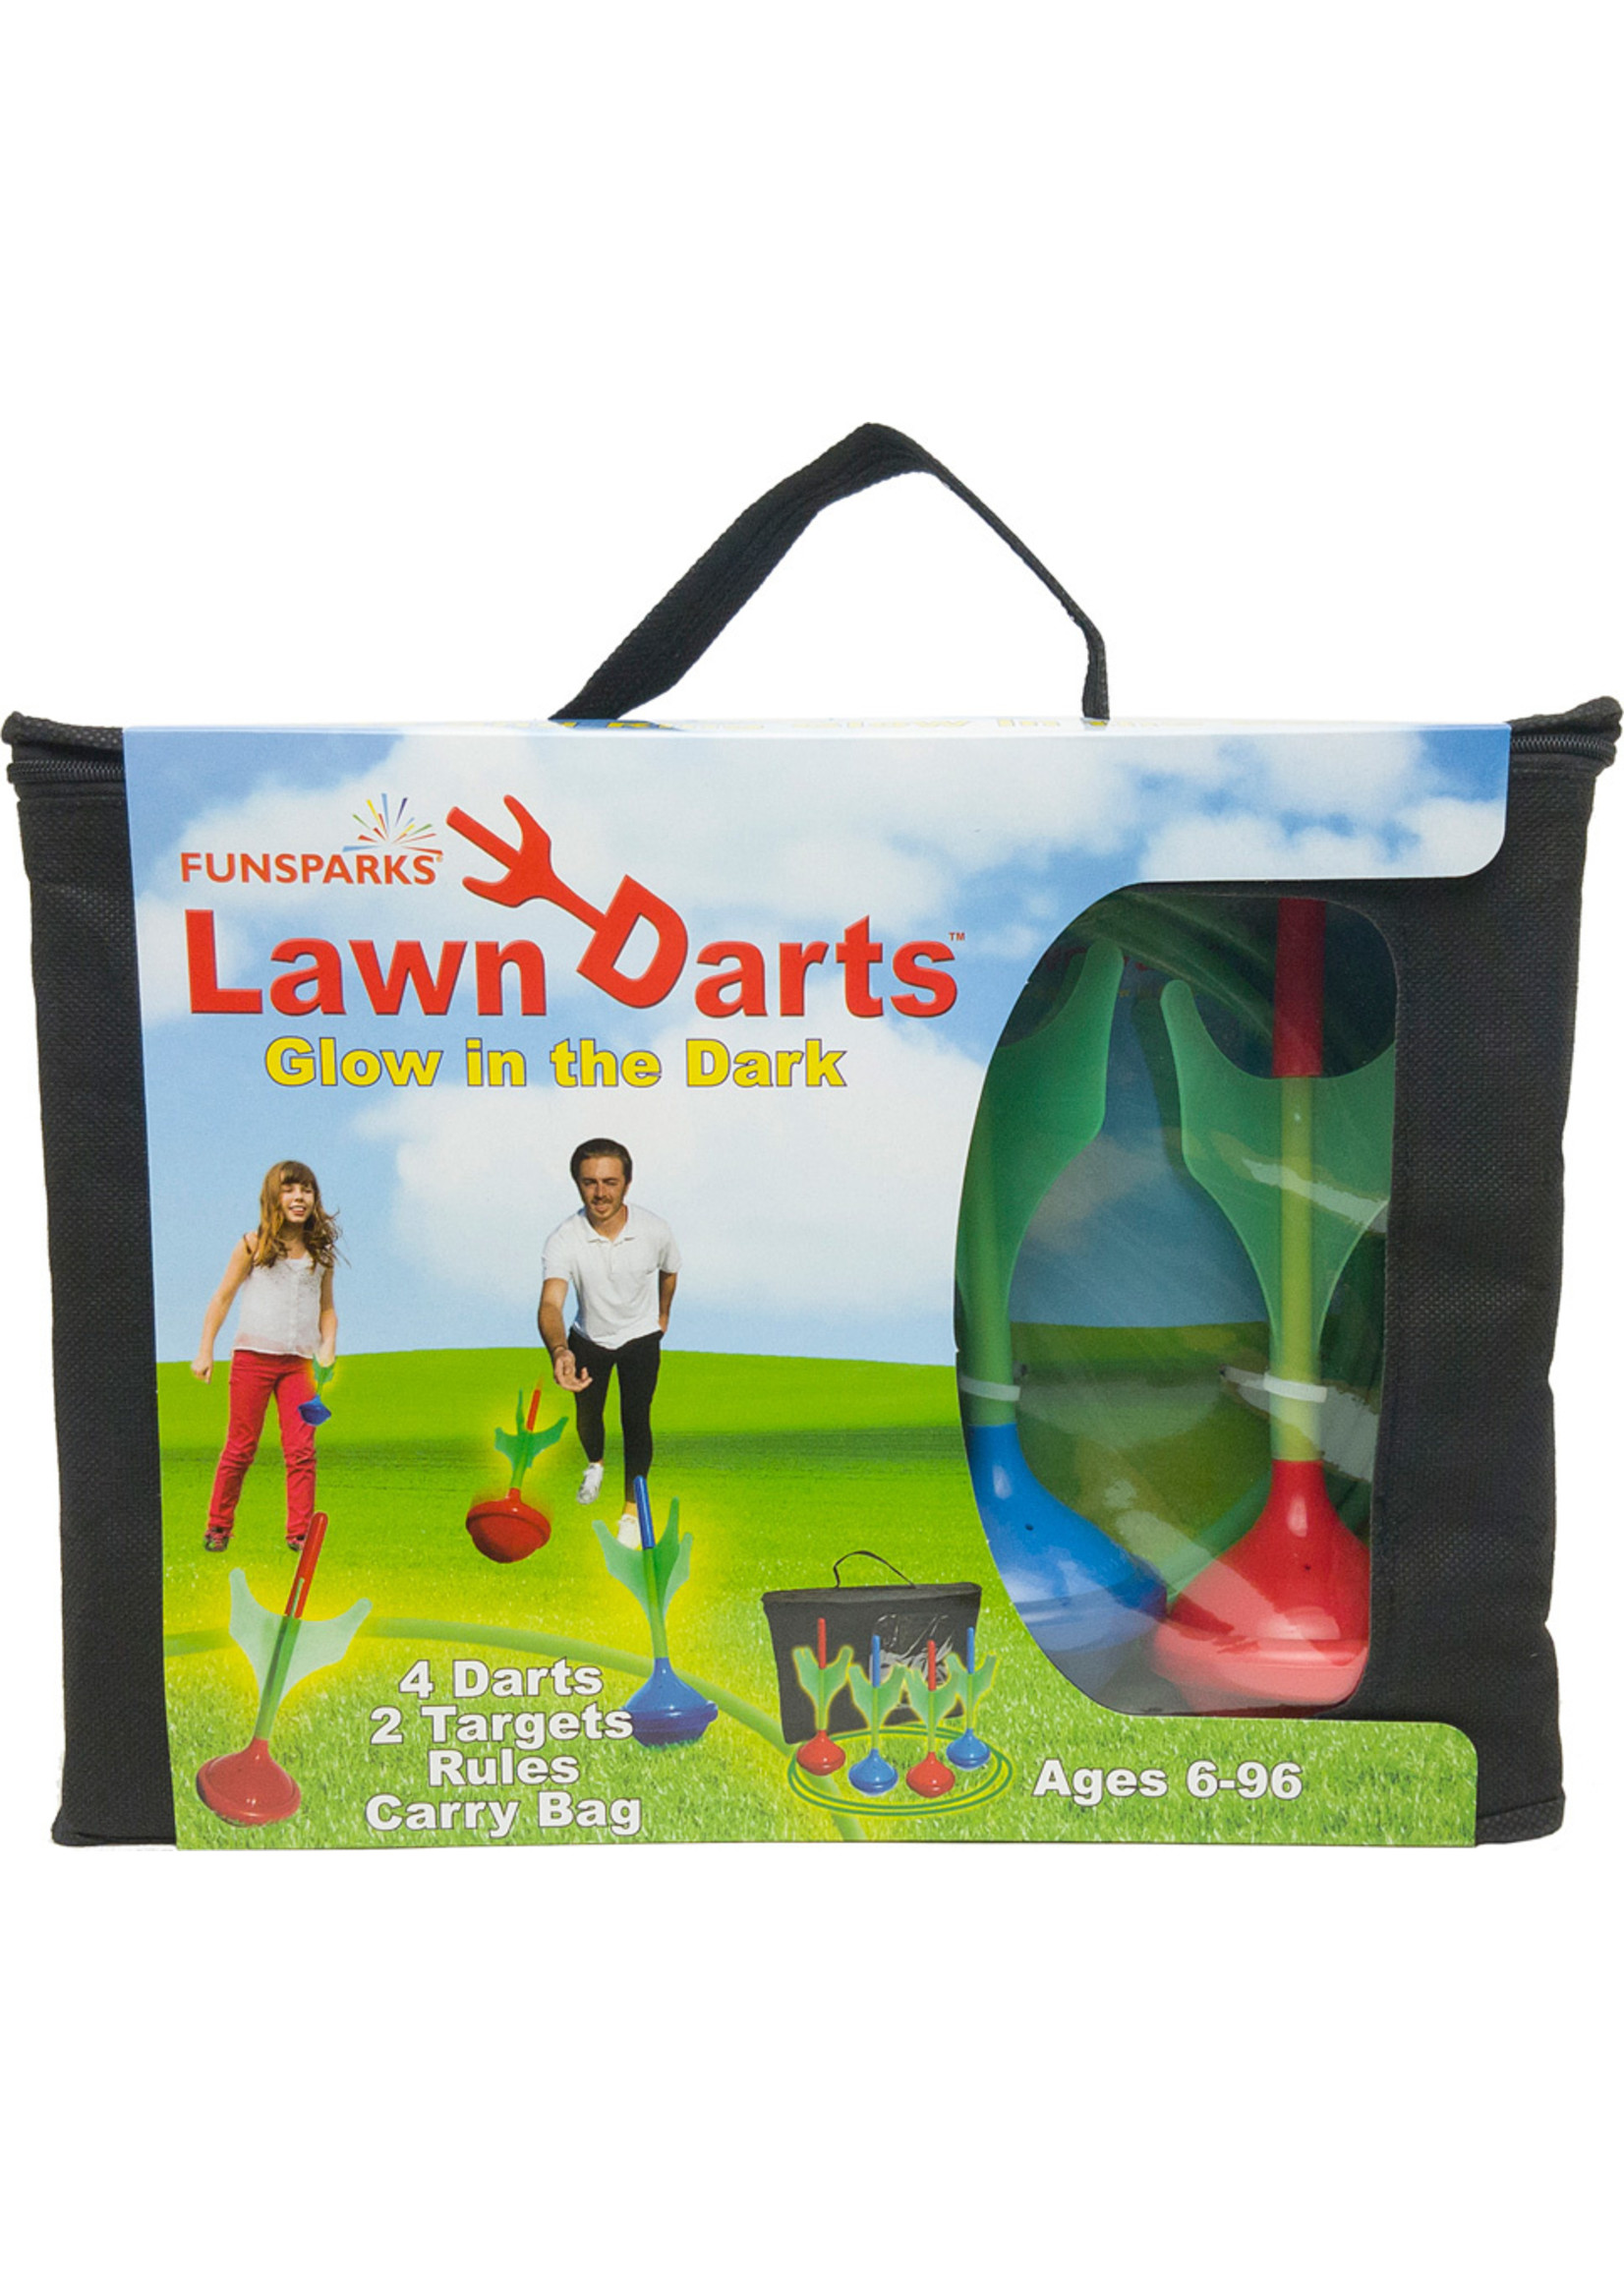 Funsparks Lawn Darts